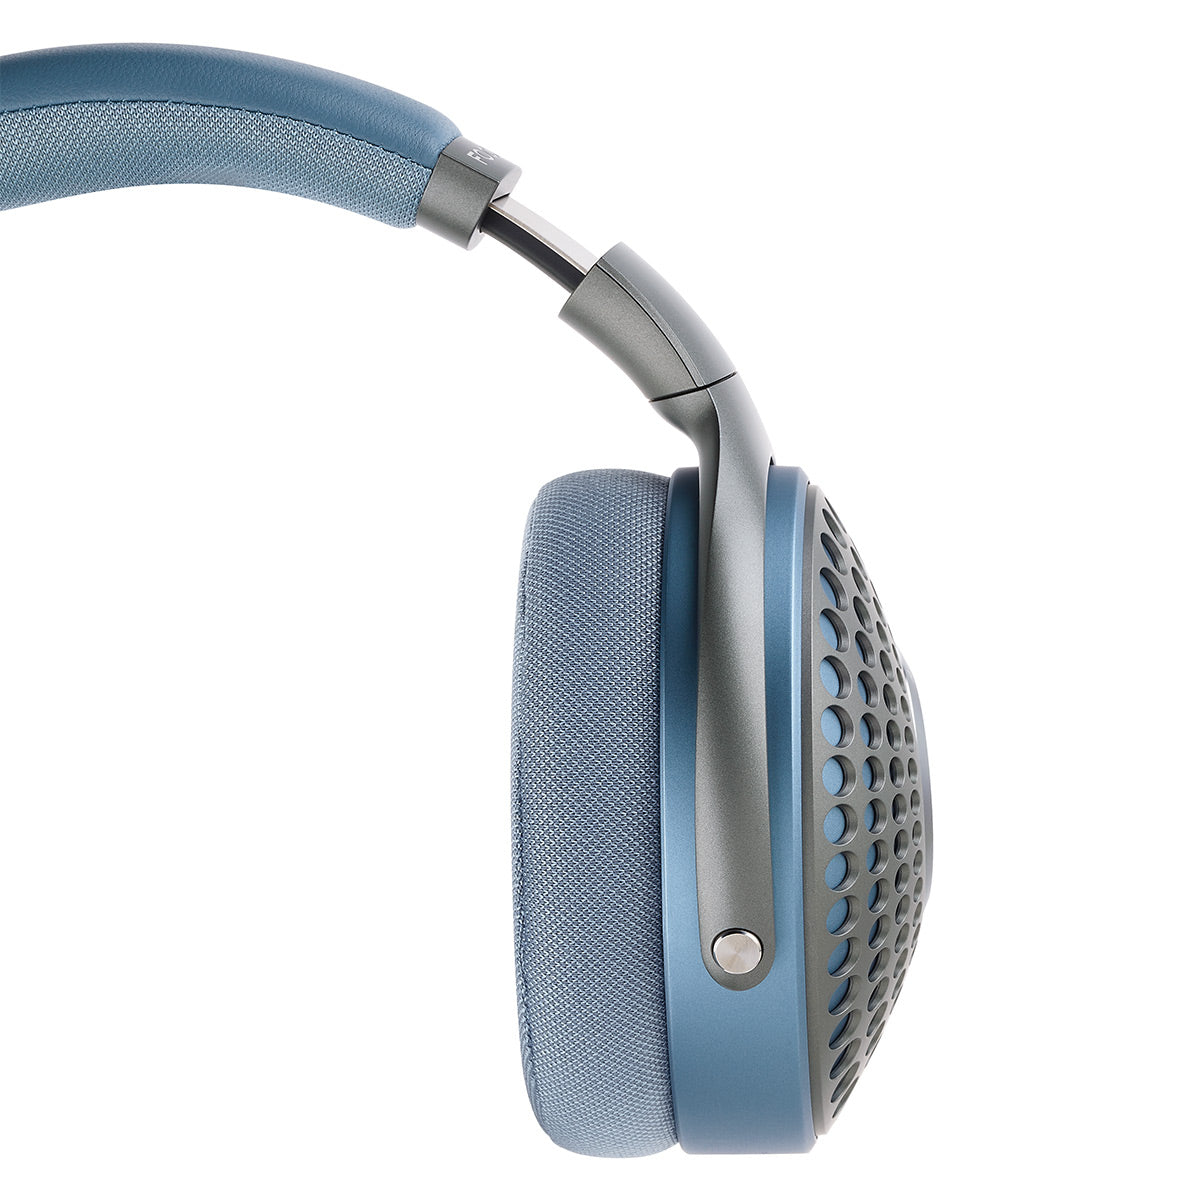 Focal Azurys Closed-Back Headphones (Blue)